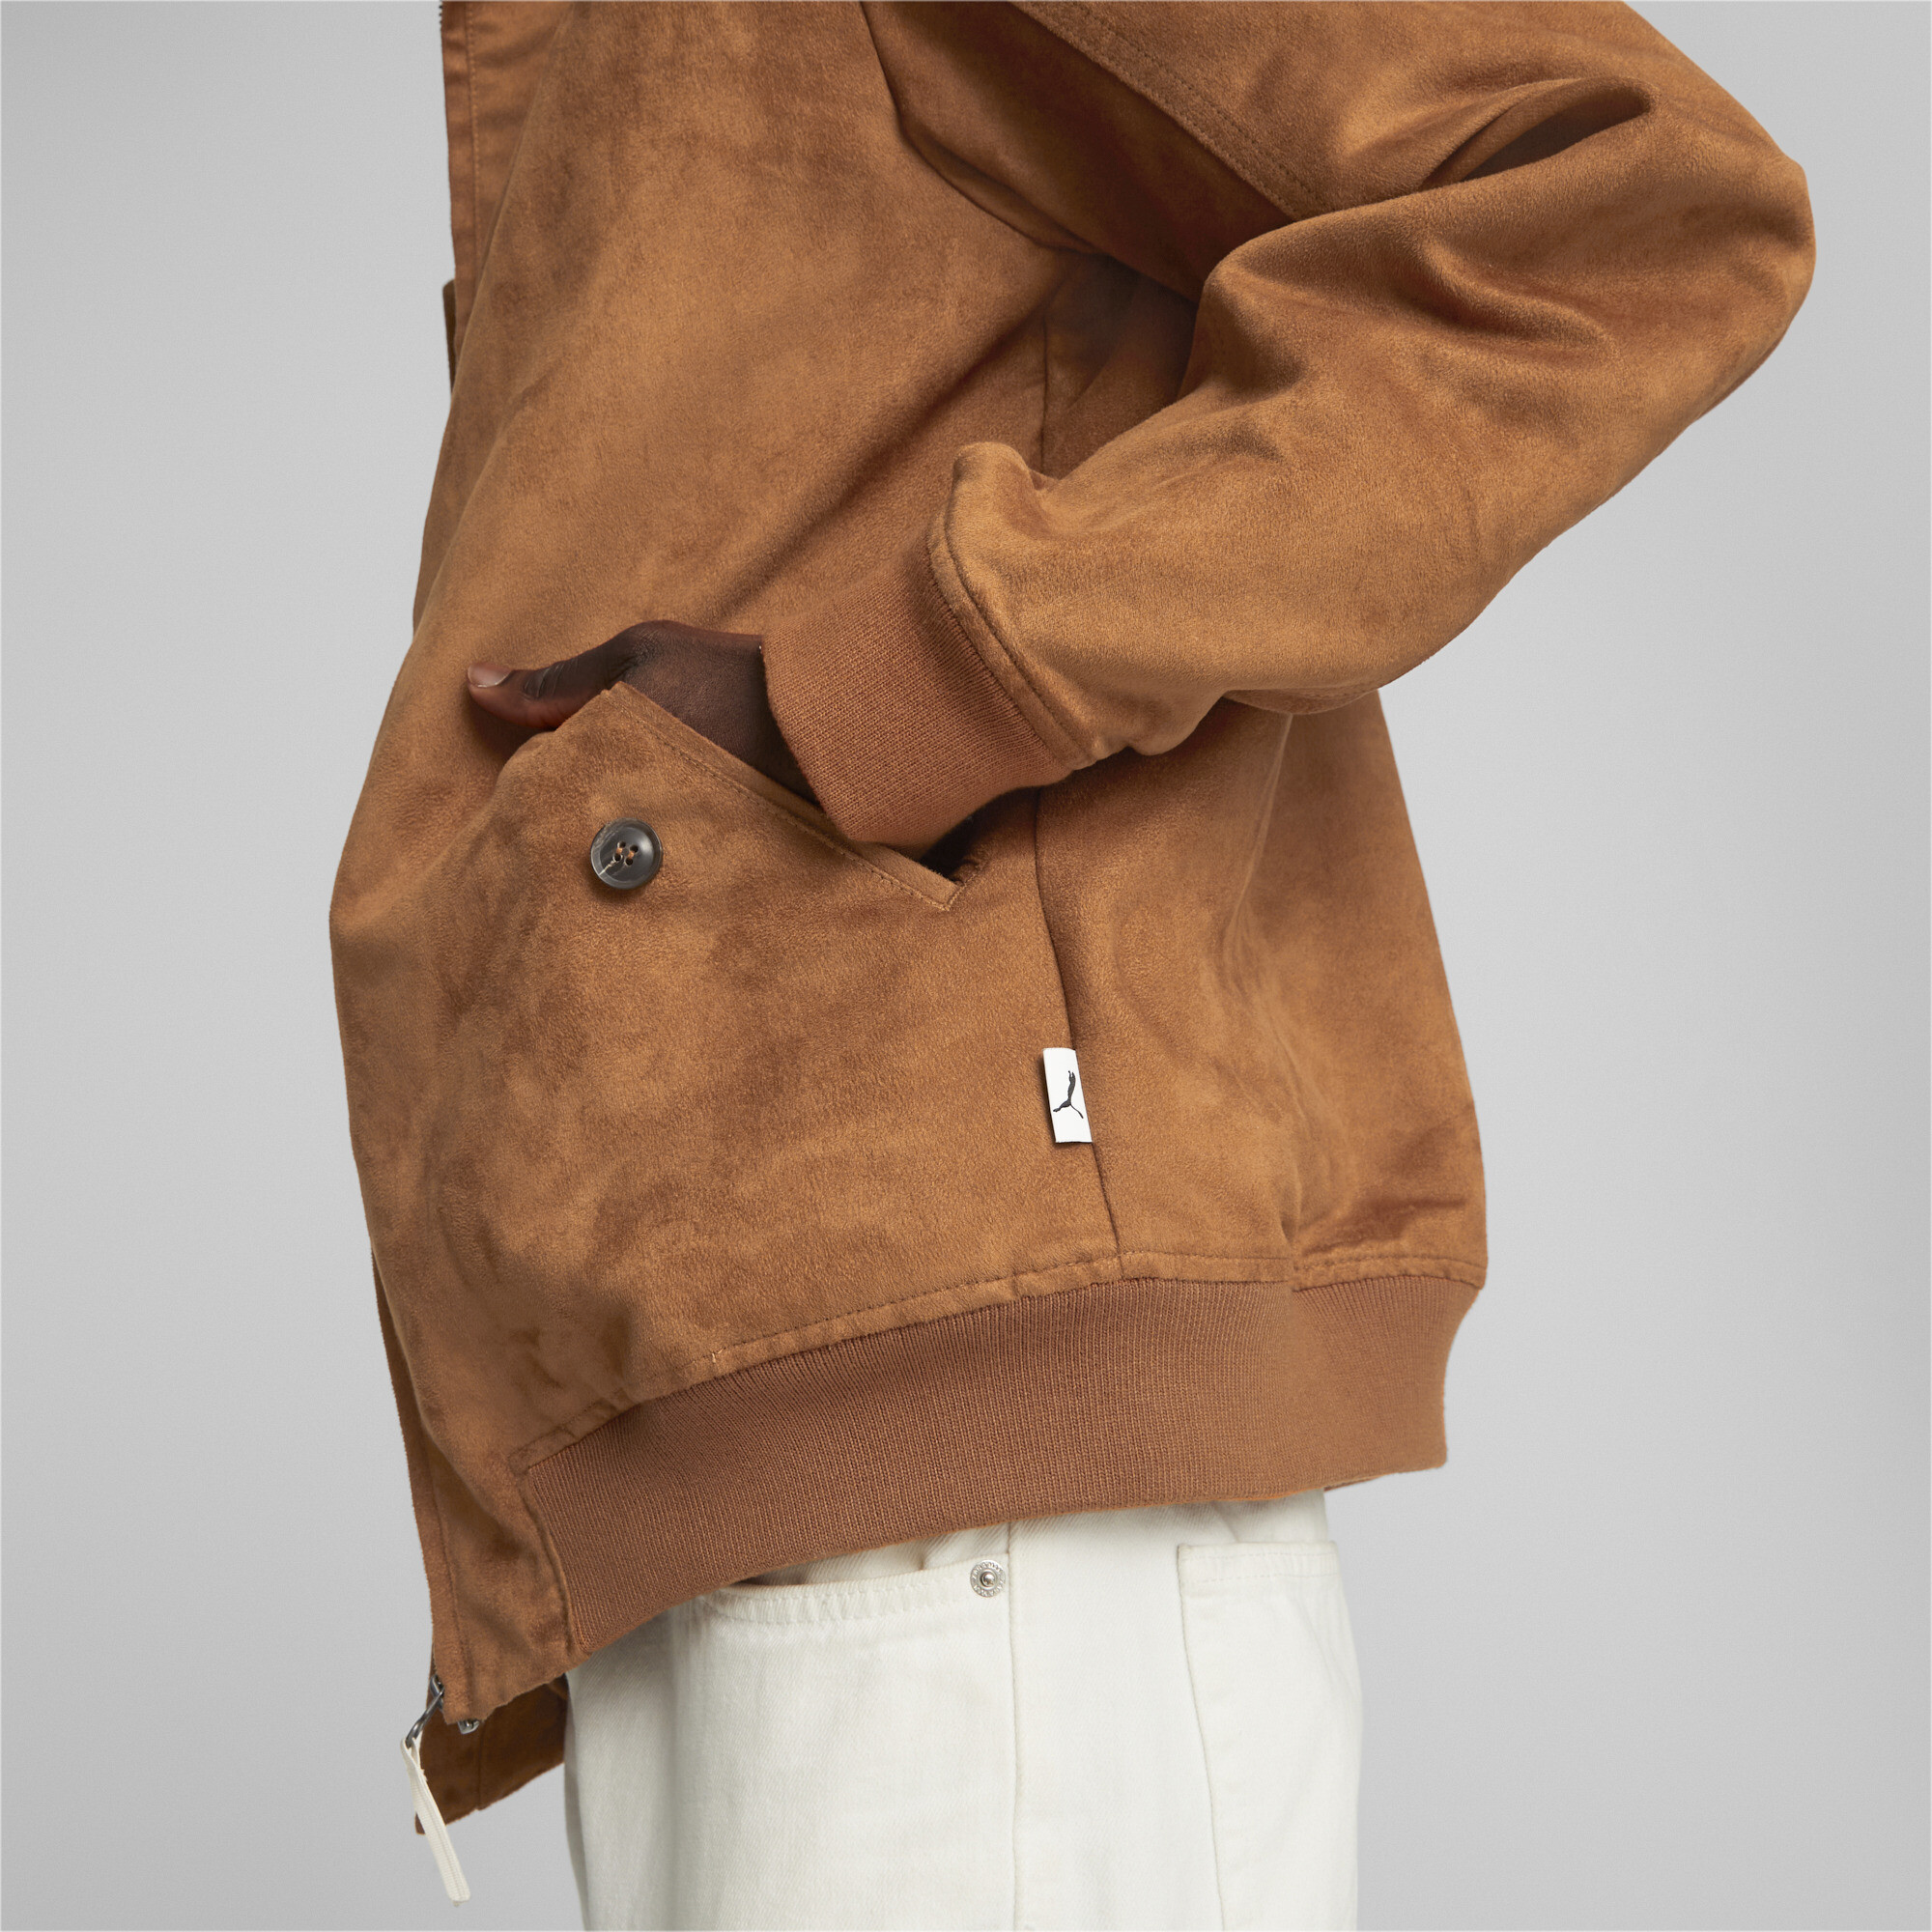 Men's PUMA MMQ Harrington Jacket In Brown, Size Medium